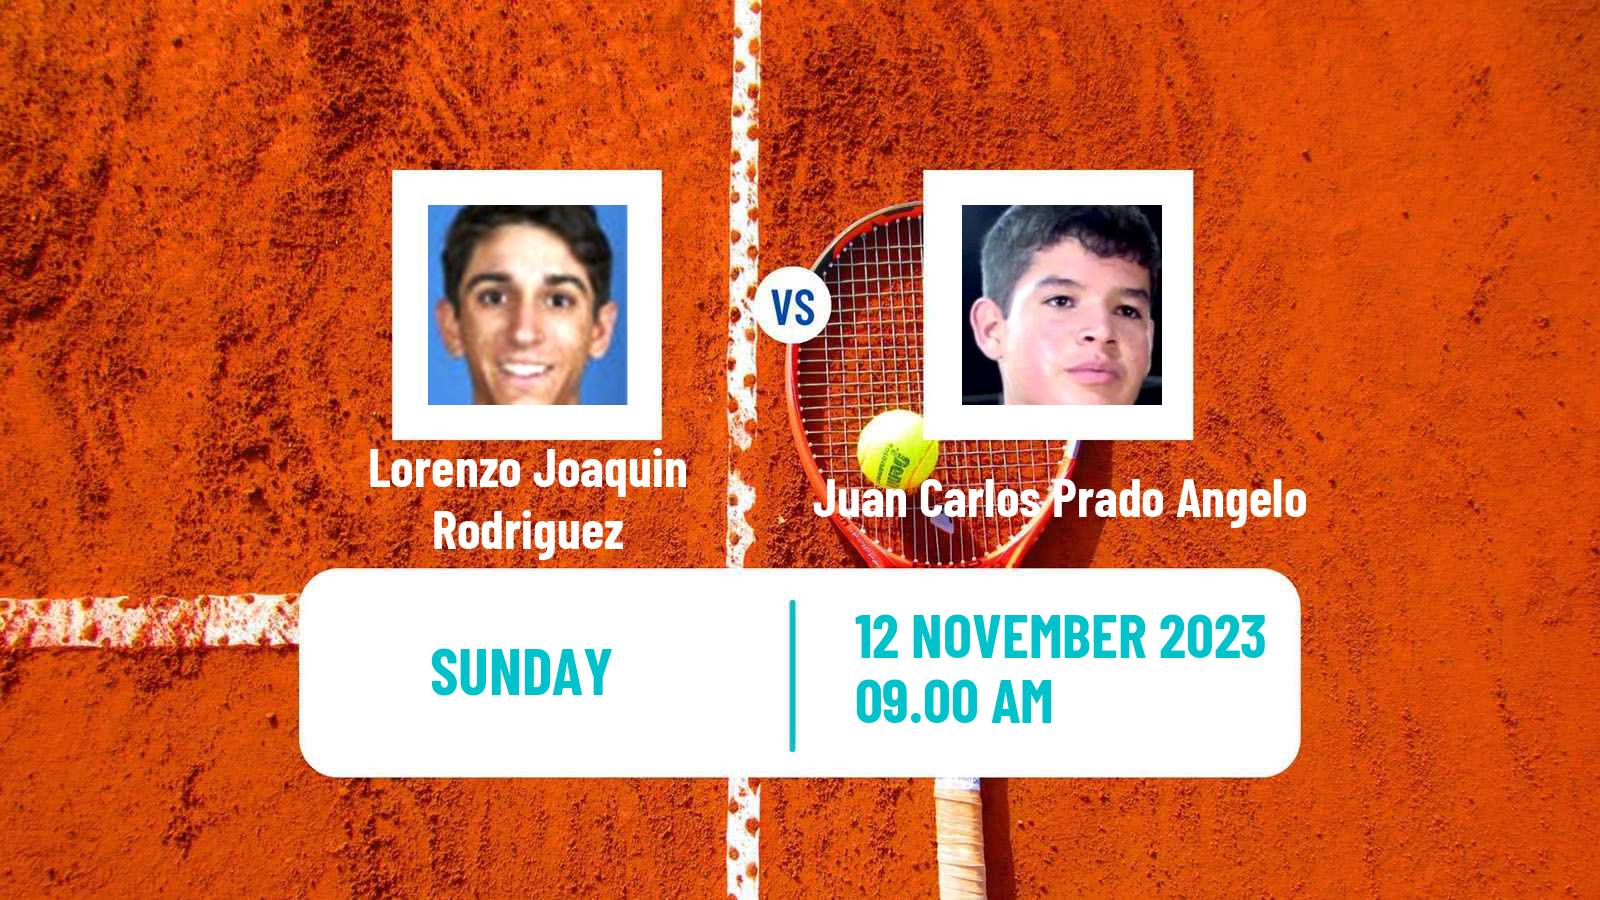 Tennis ITF M15 Rosario Men Lorenzo Joaquin Rodriguez - Juan Carlos Prado Angelo